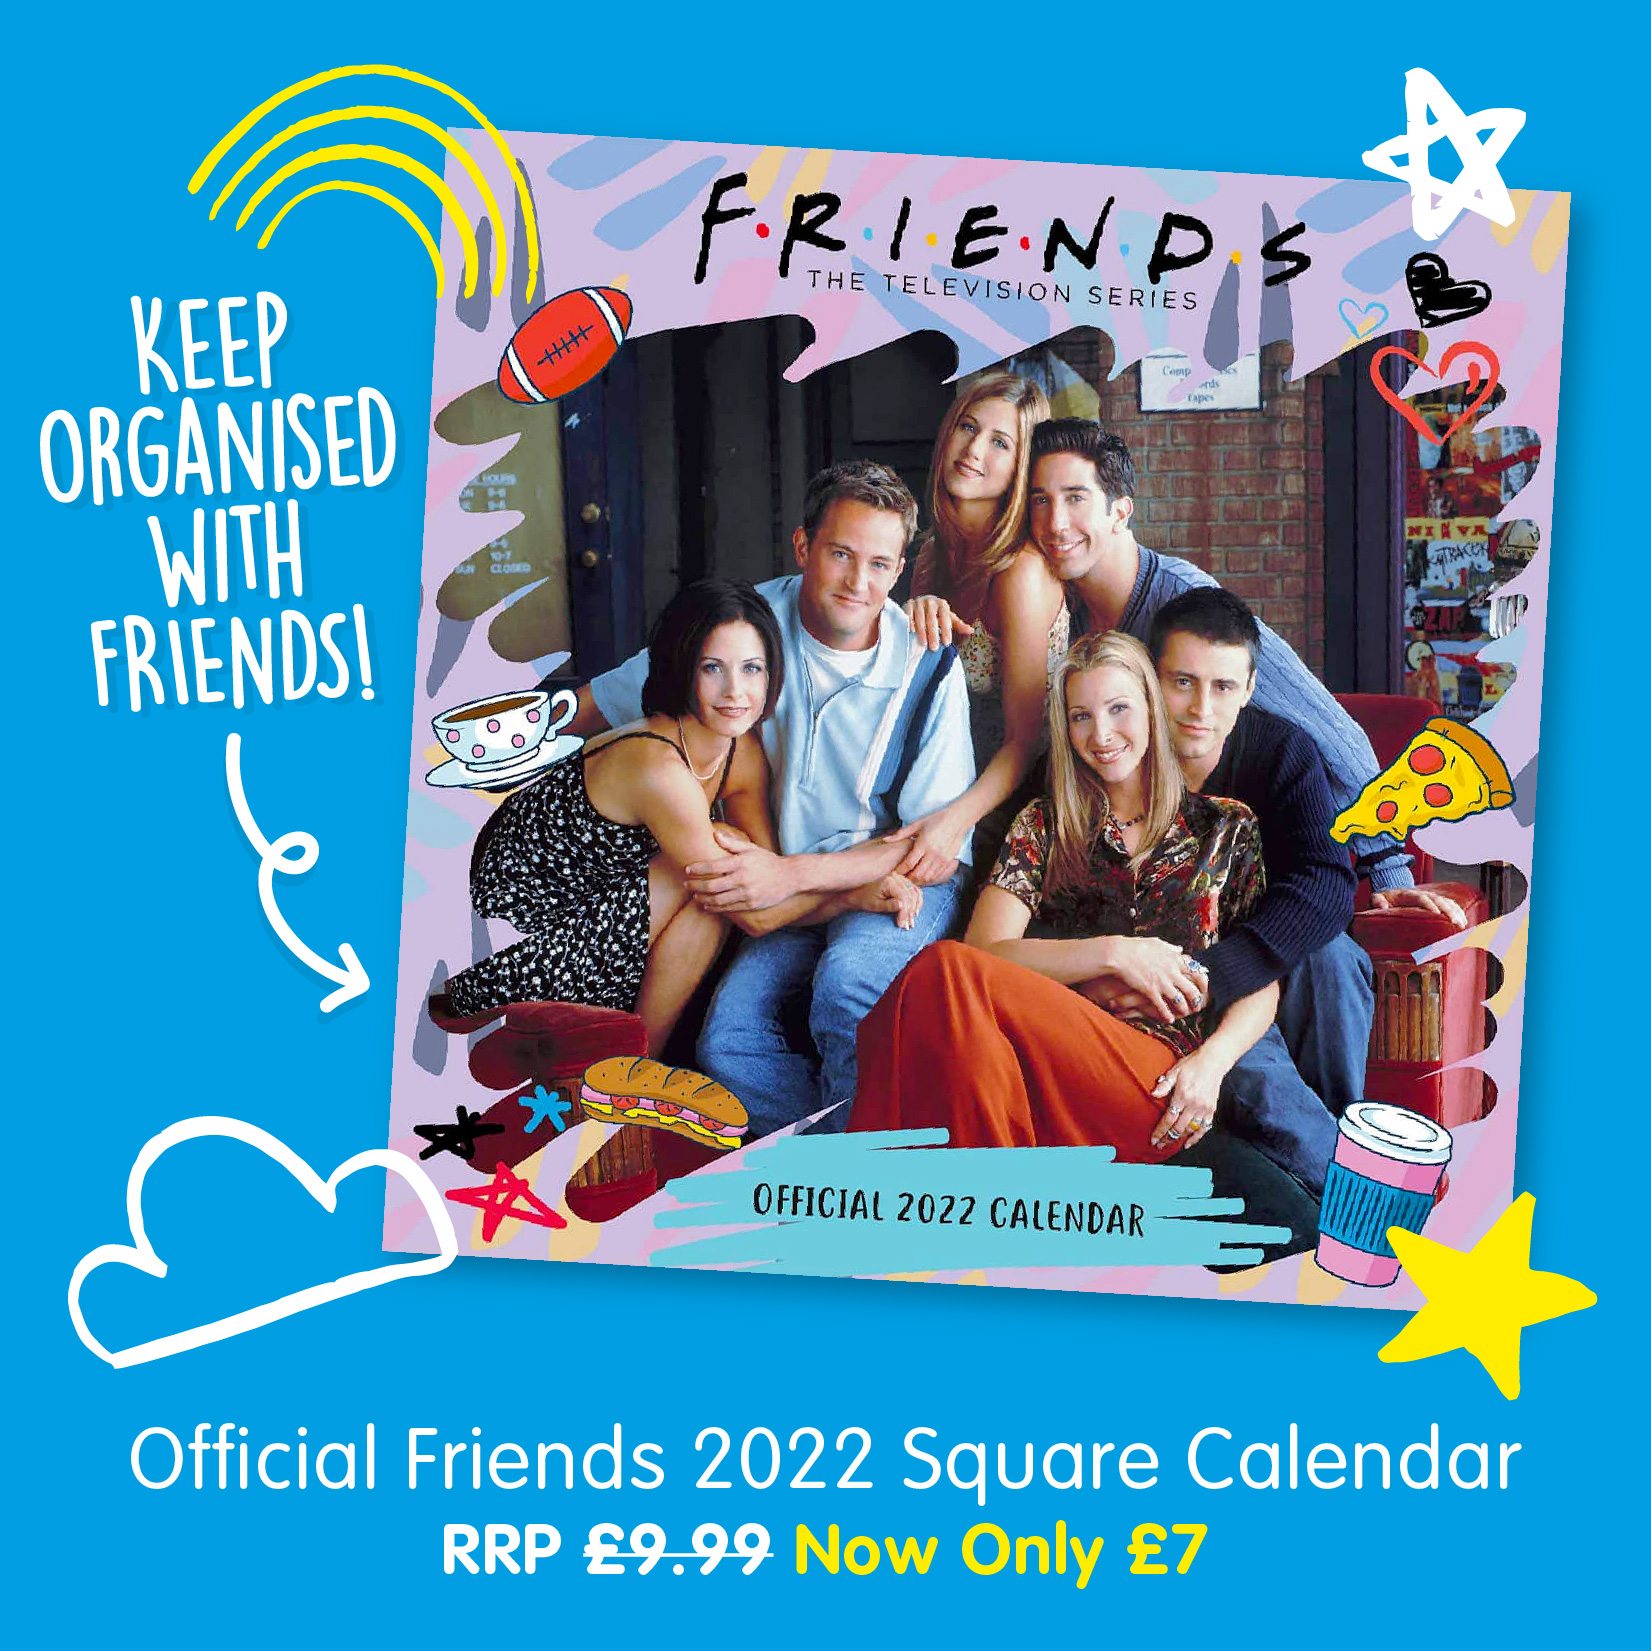 Official Friends 2022 Square Calendar